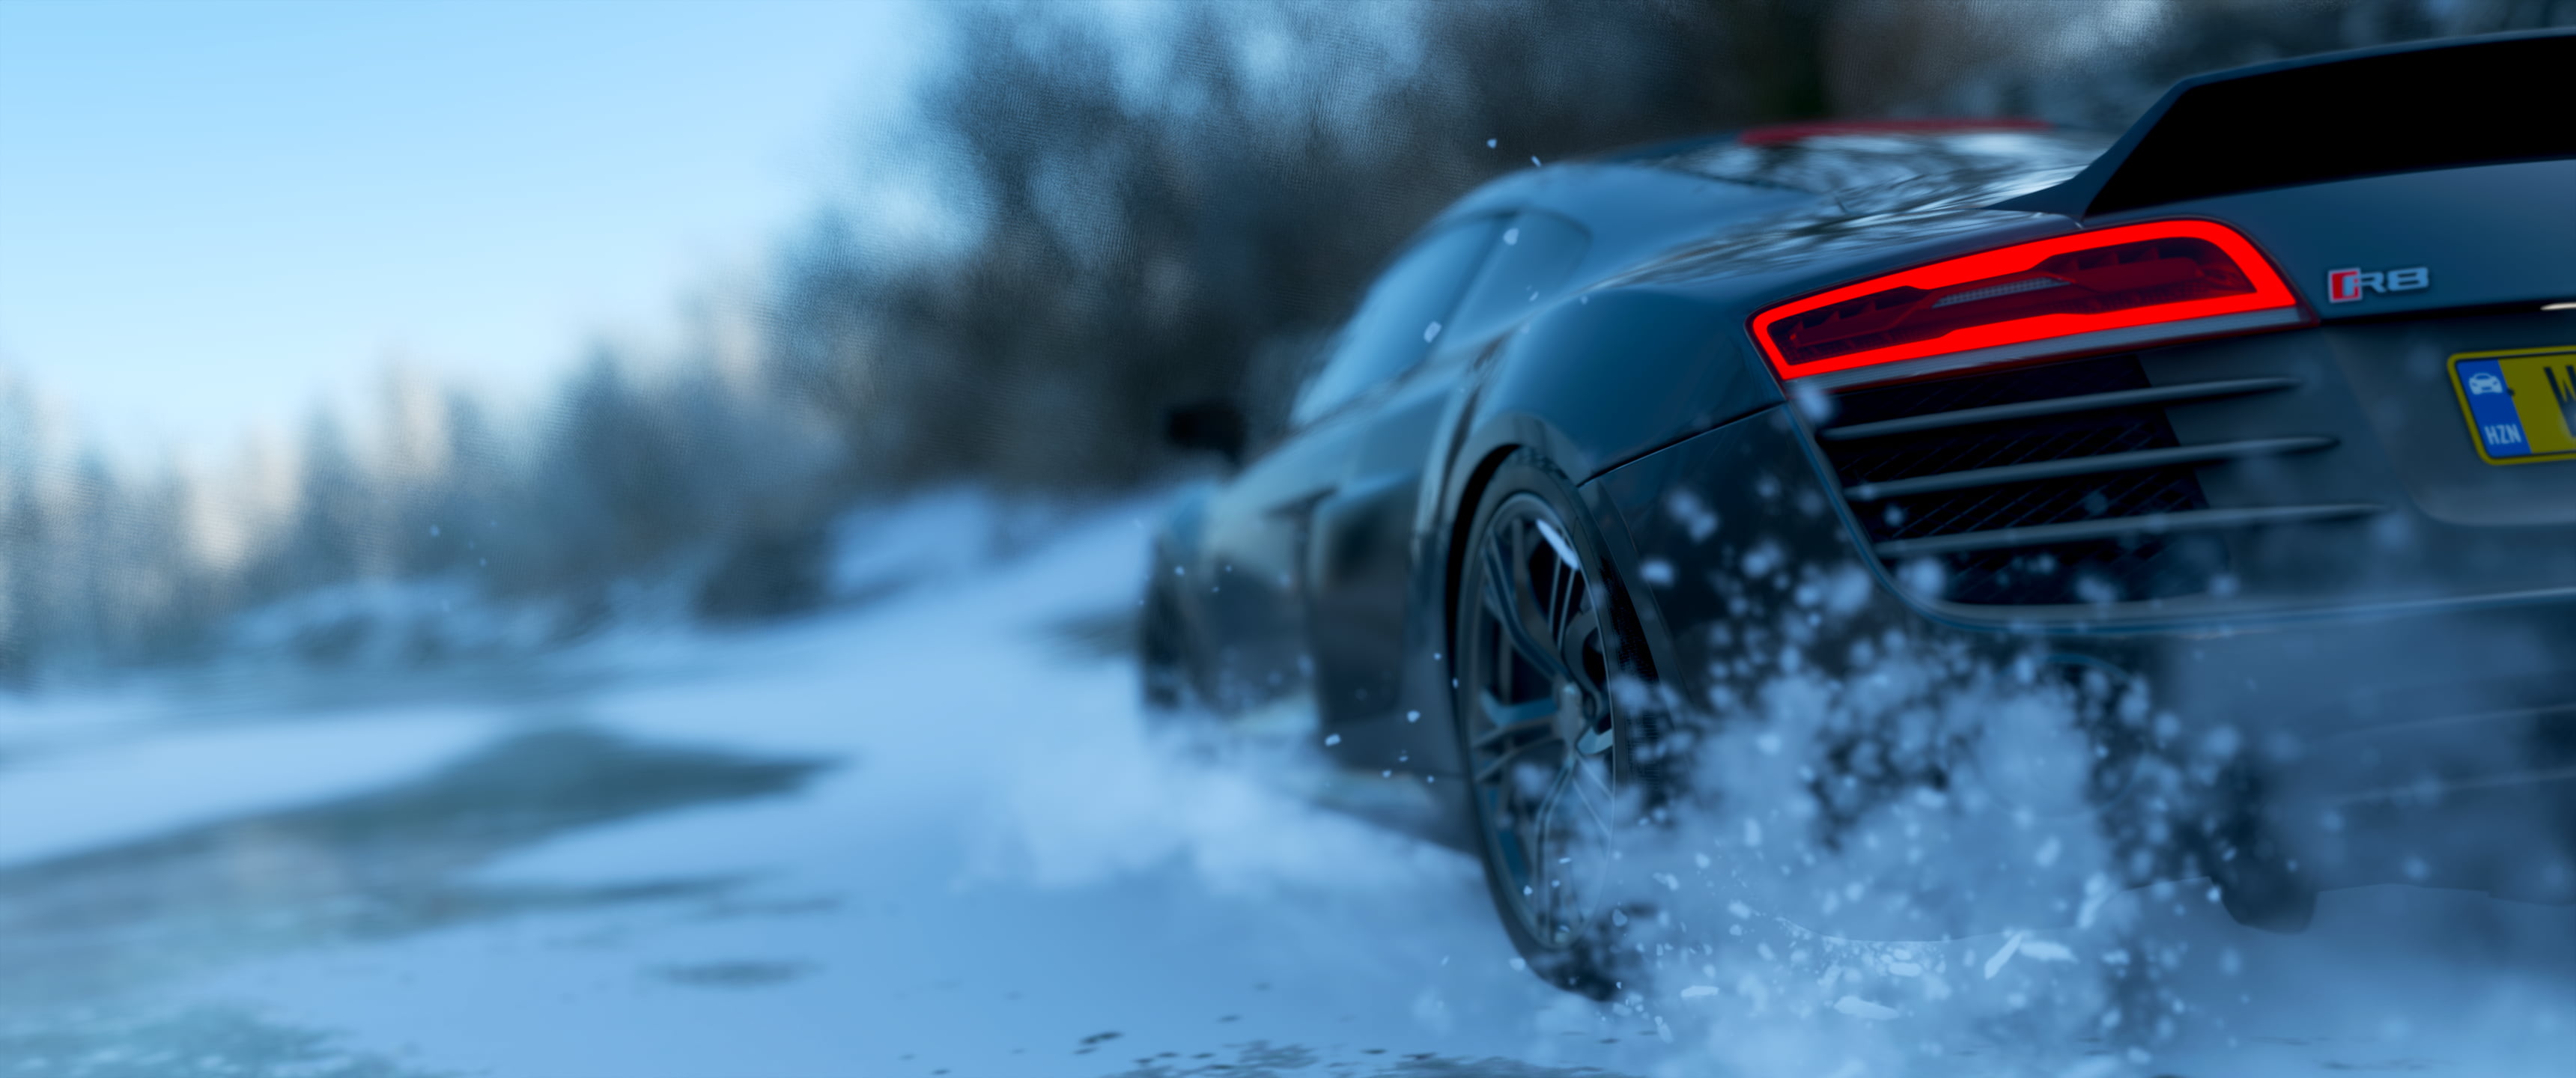 Audi R8 V10, Forza Horizon 4, snow, car, luxury, WALLHAVN